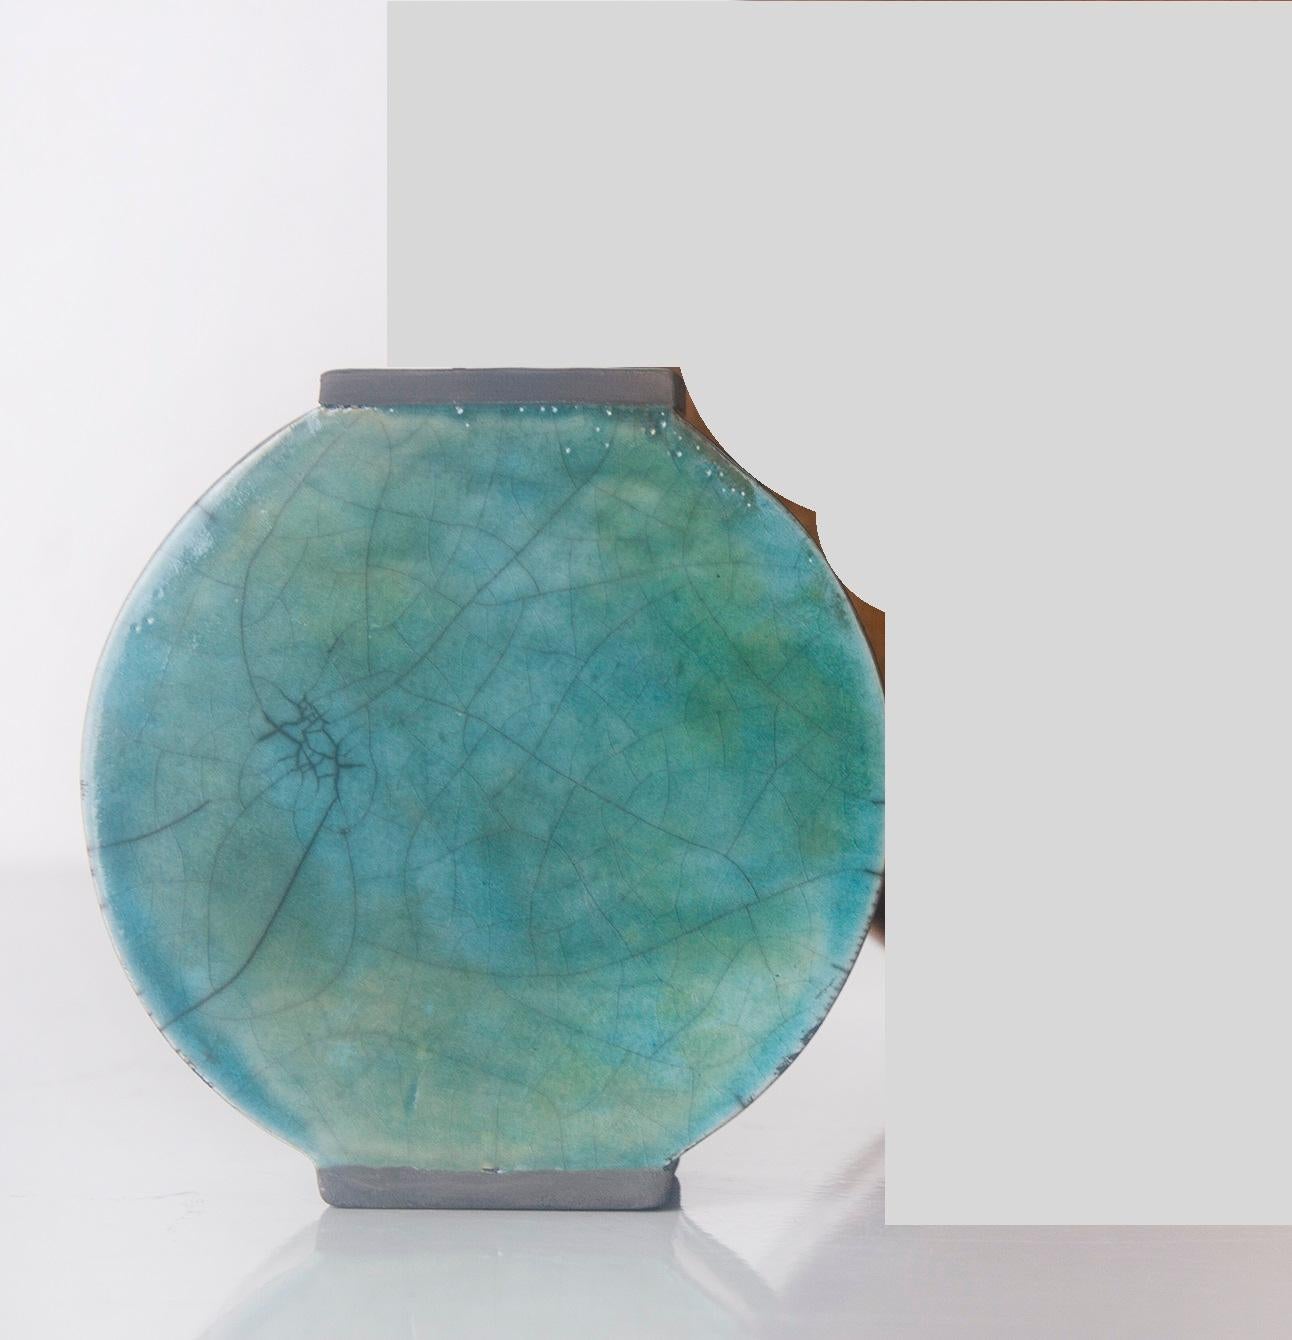 Jade vases by Doa Ceramics 
Dimensions: 12